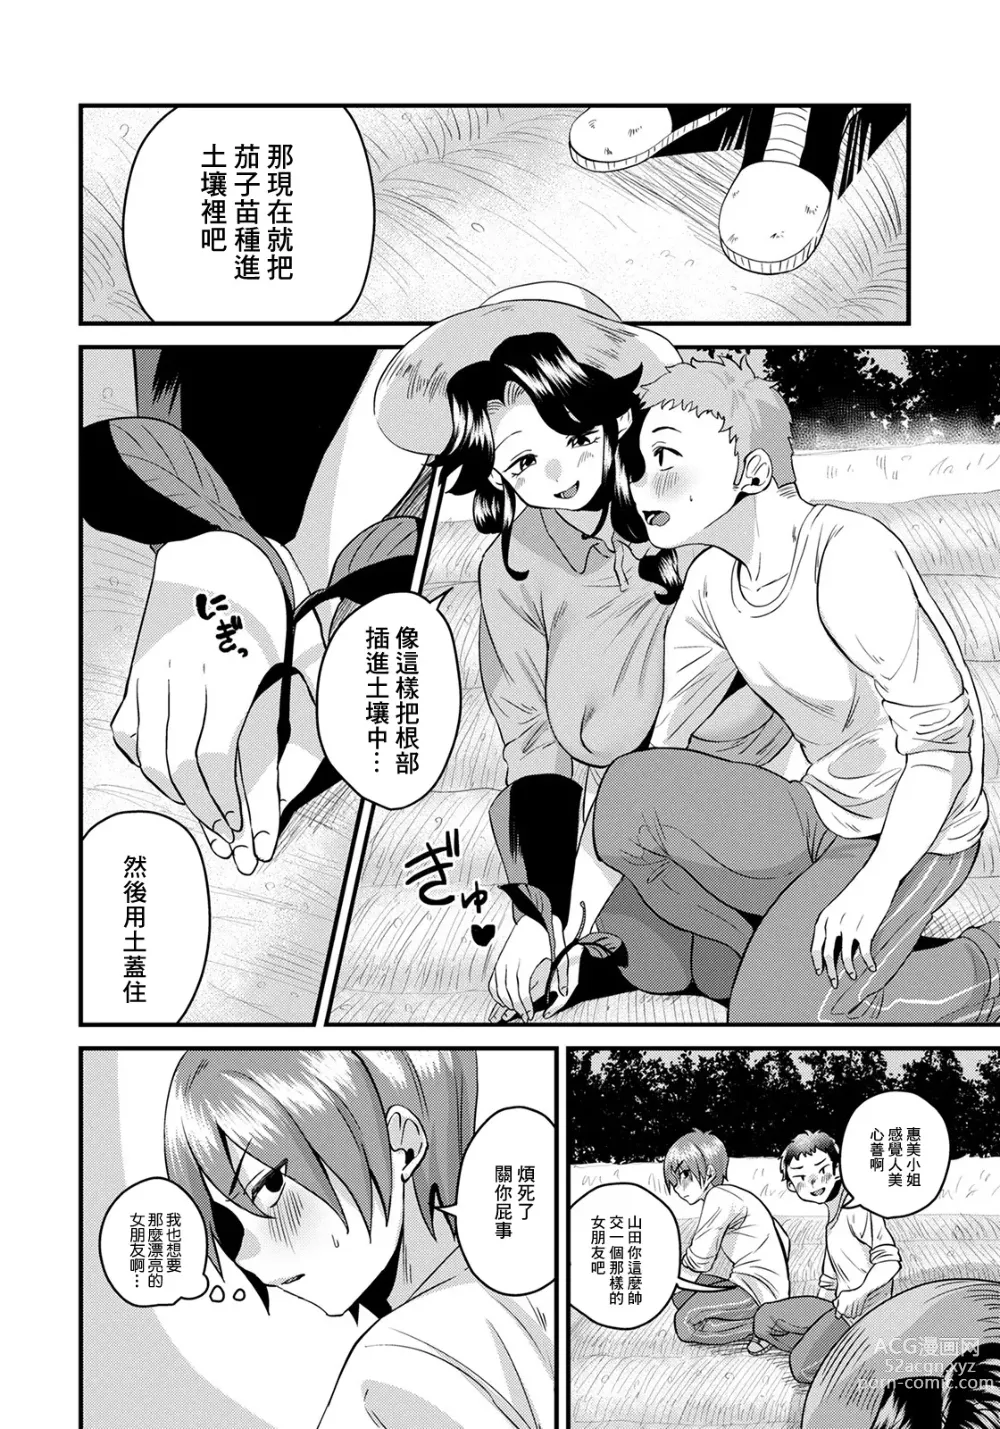 Page 2 of manga Nouka de Fudeoroshi Onee-san